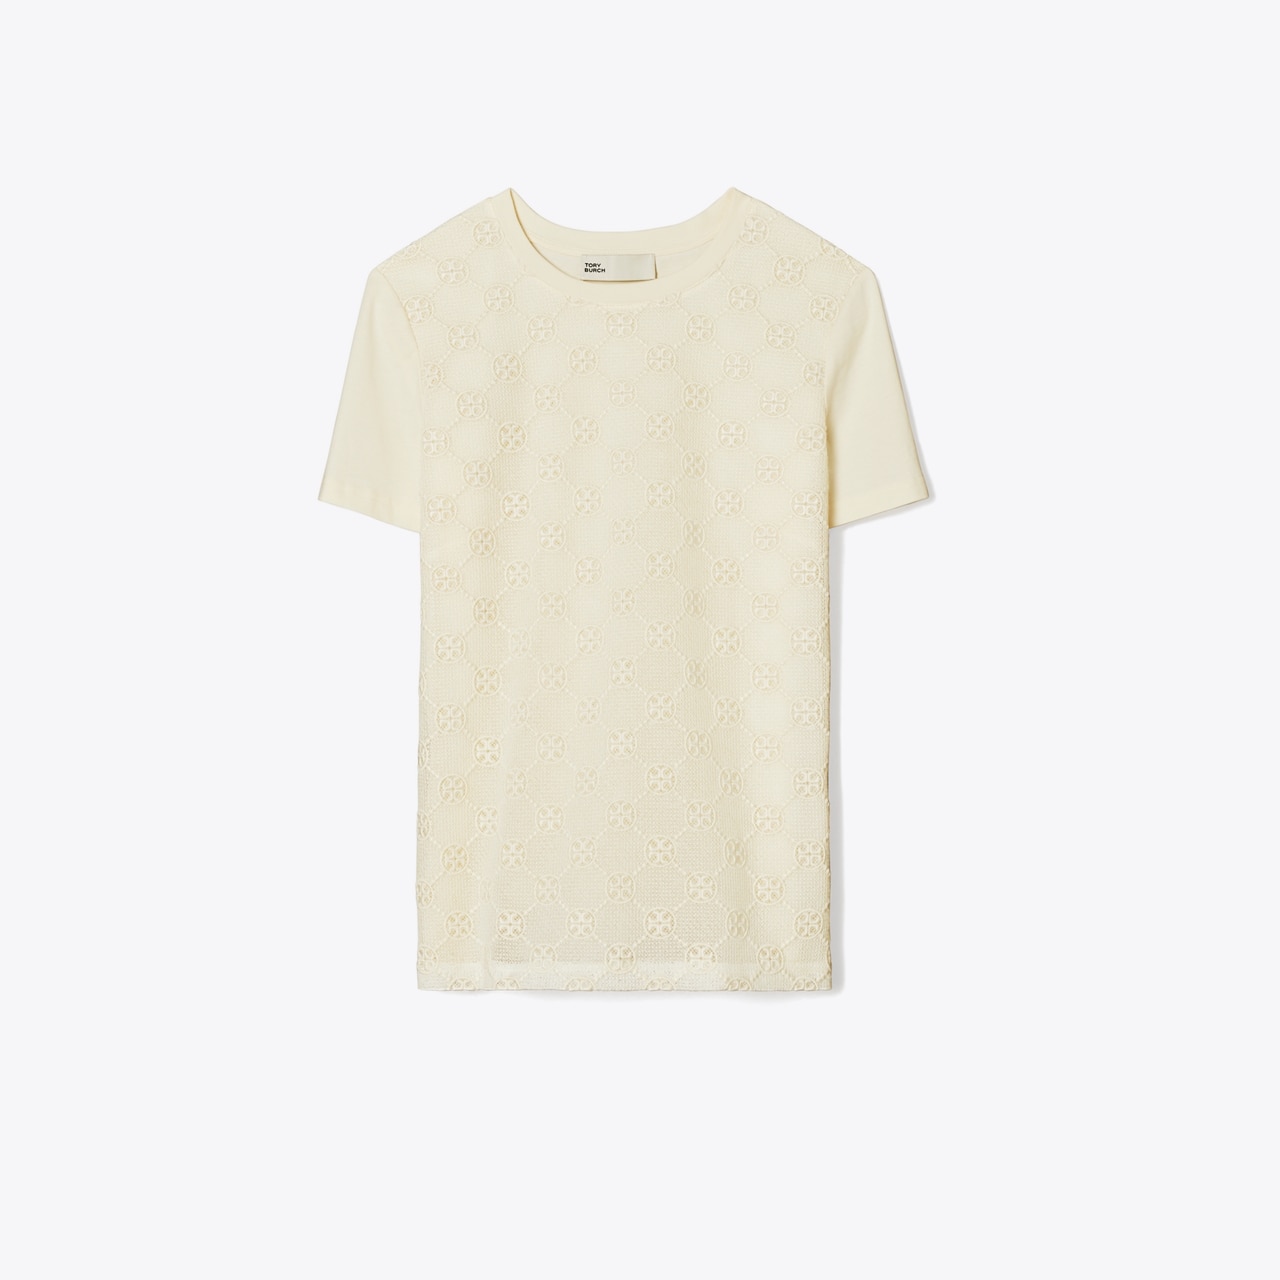 Louis Vuitton White Cotton Logo Embroidered Long Sleeve T-Shirt M